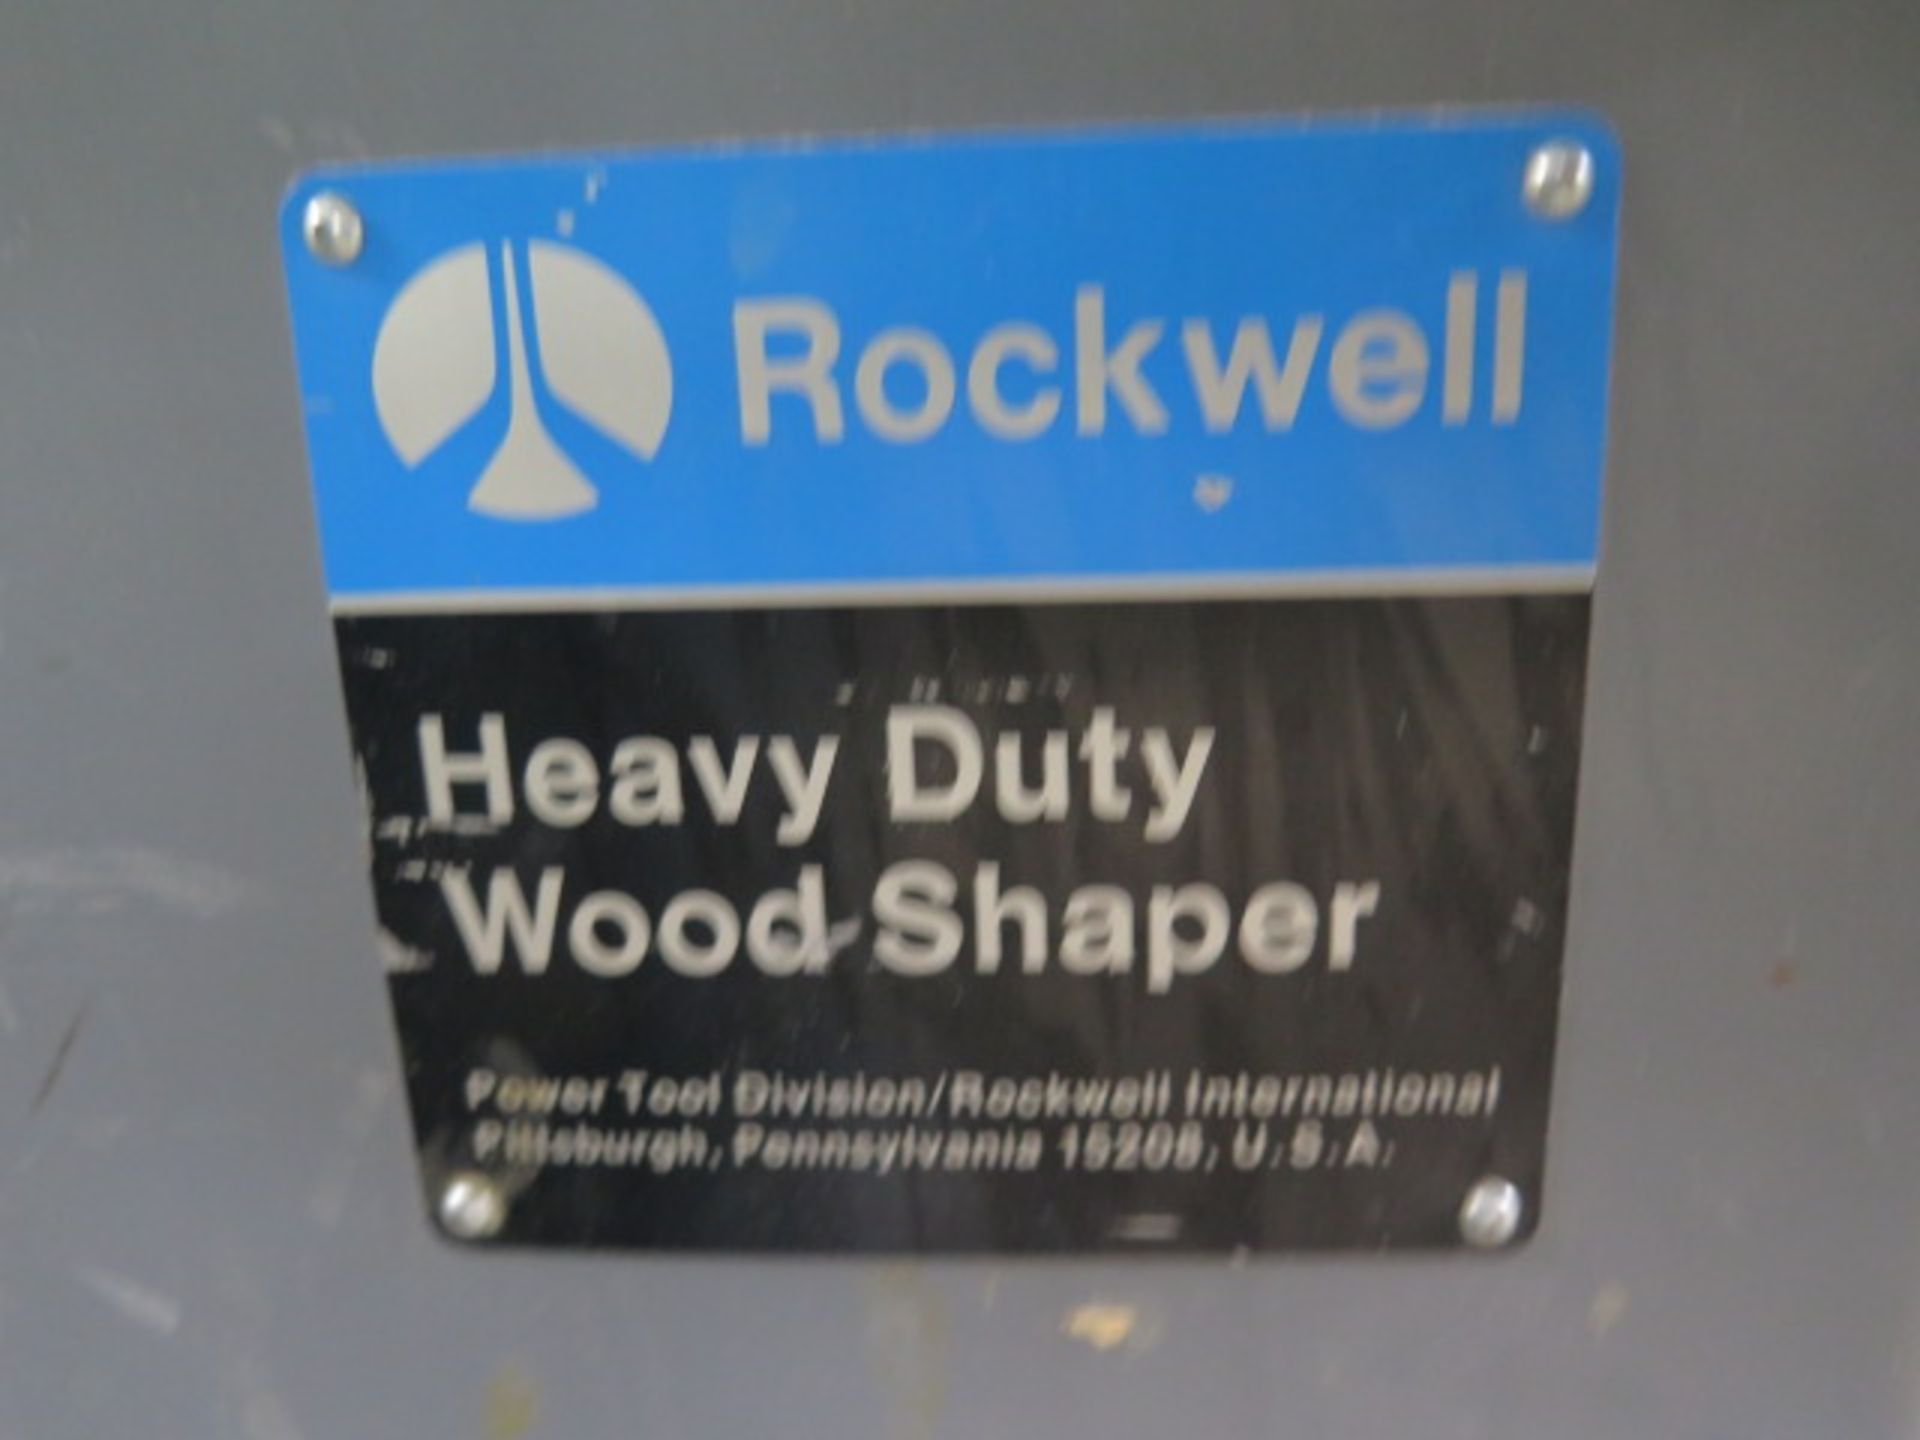 Rockwell mdl. 43-372 Heavy Duty Wood Shaper s/n 84L04332 w/ 7000-10,000 RPM (SOLD AS-IS - NO - Image 8 of 8